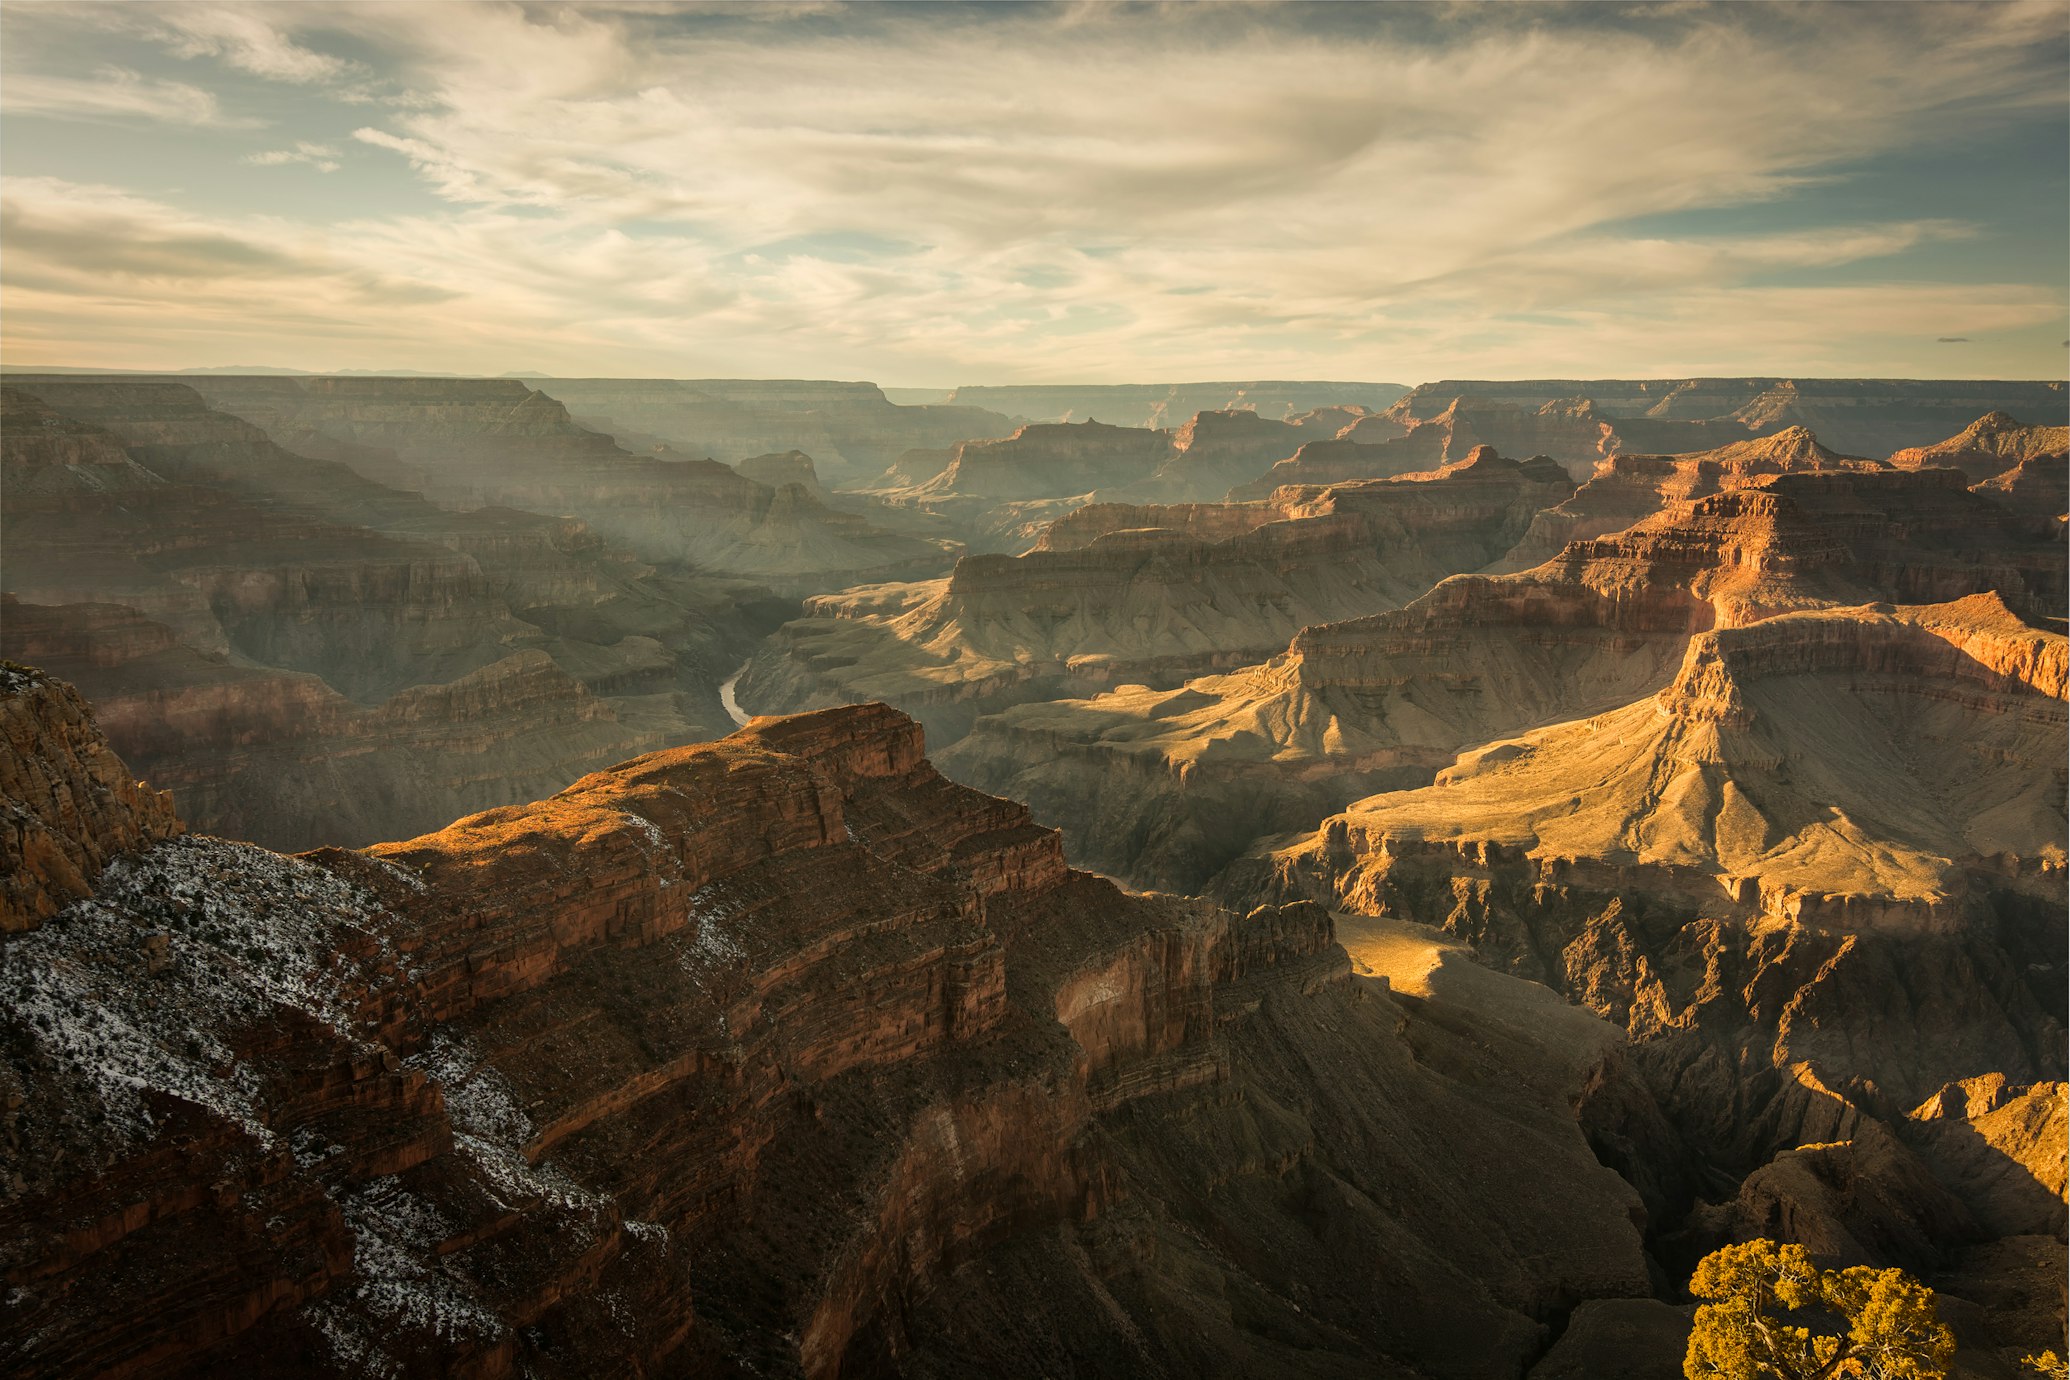 Grand Canyon National Park image